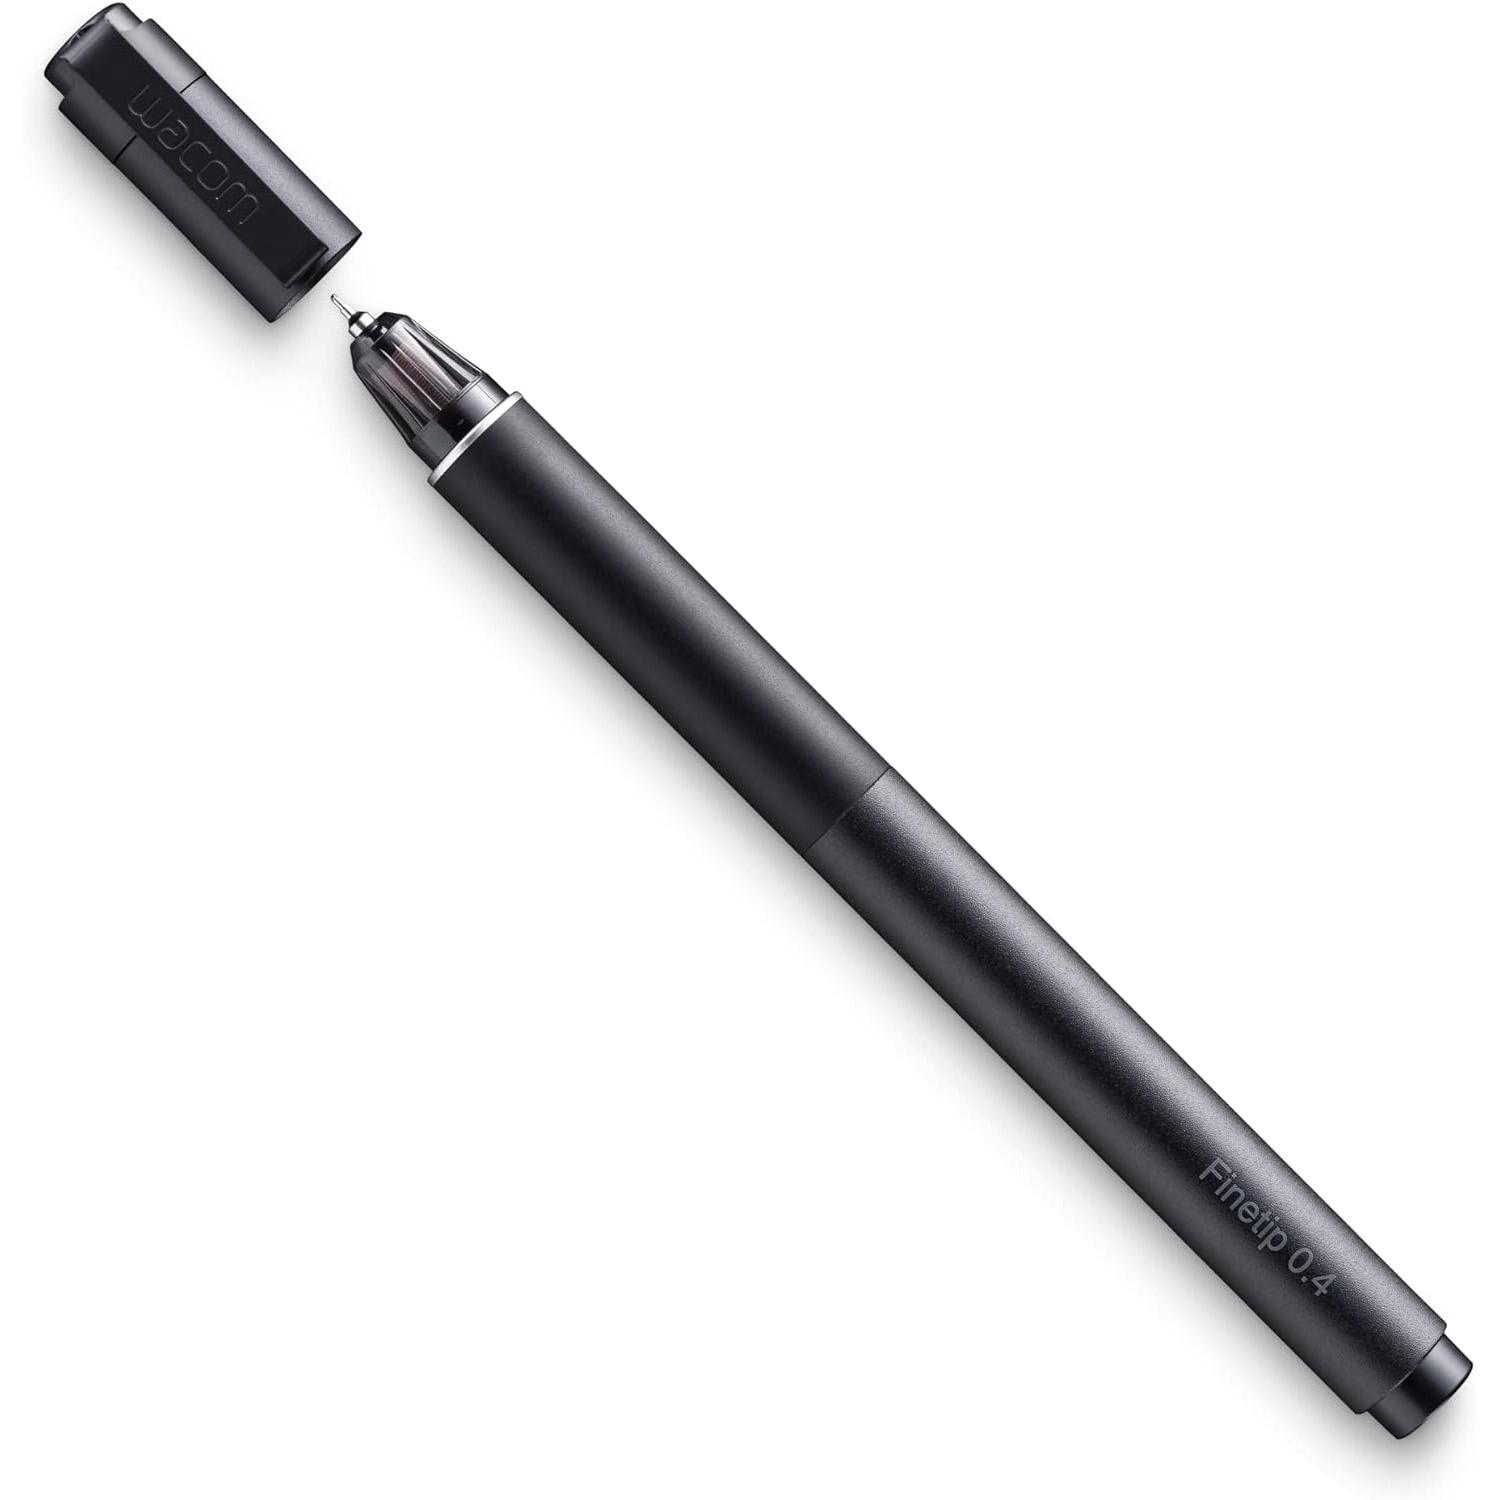 Wacom KP13200D Fine tip Pen for $0.99